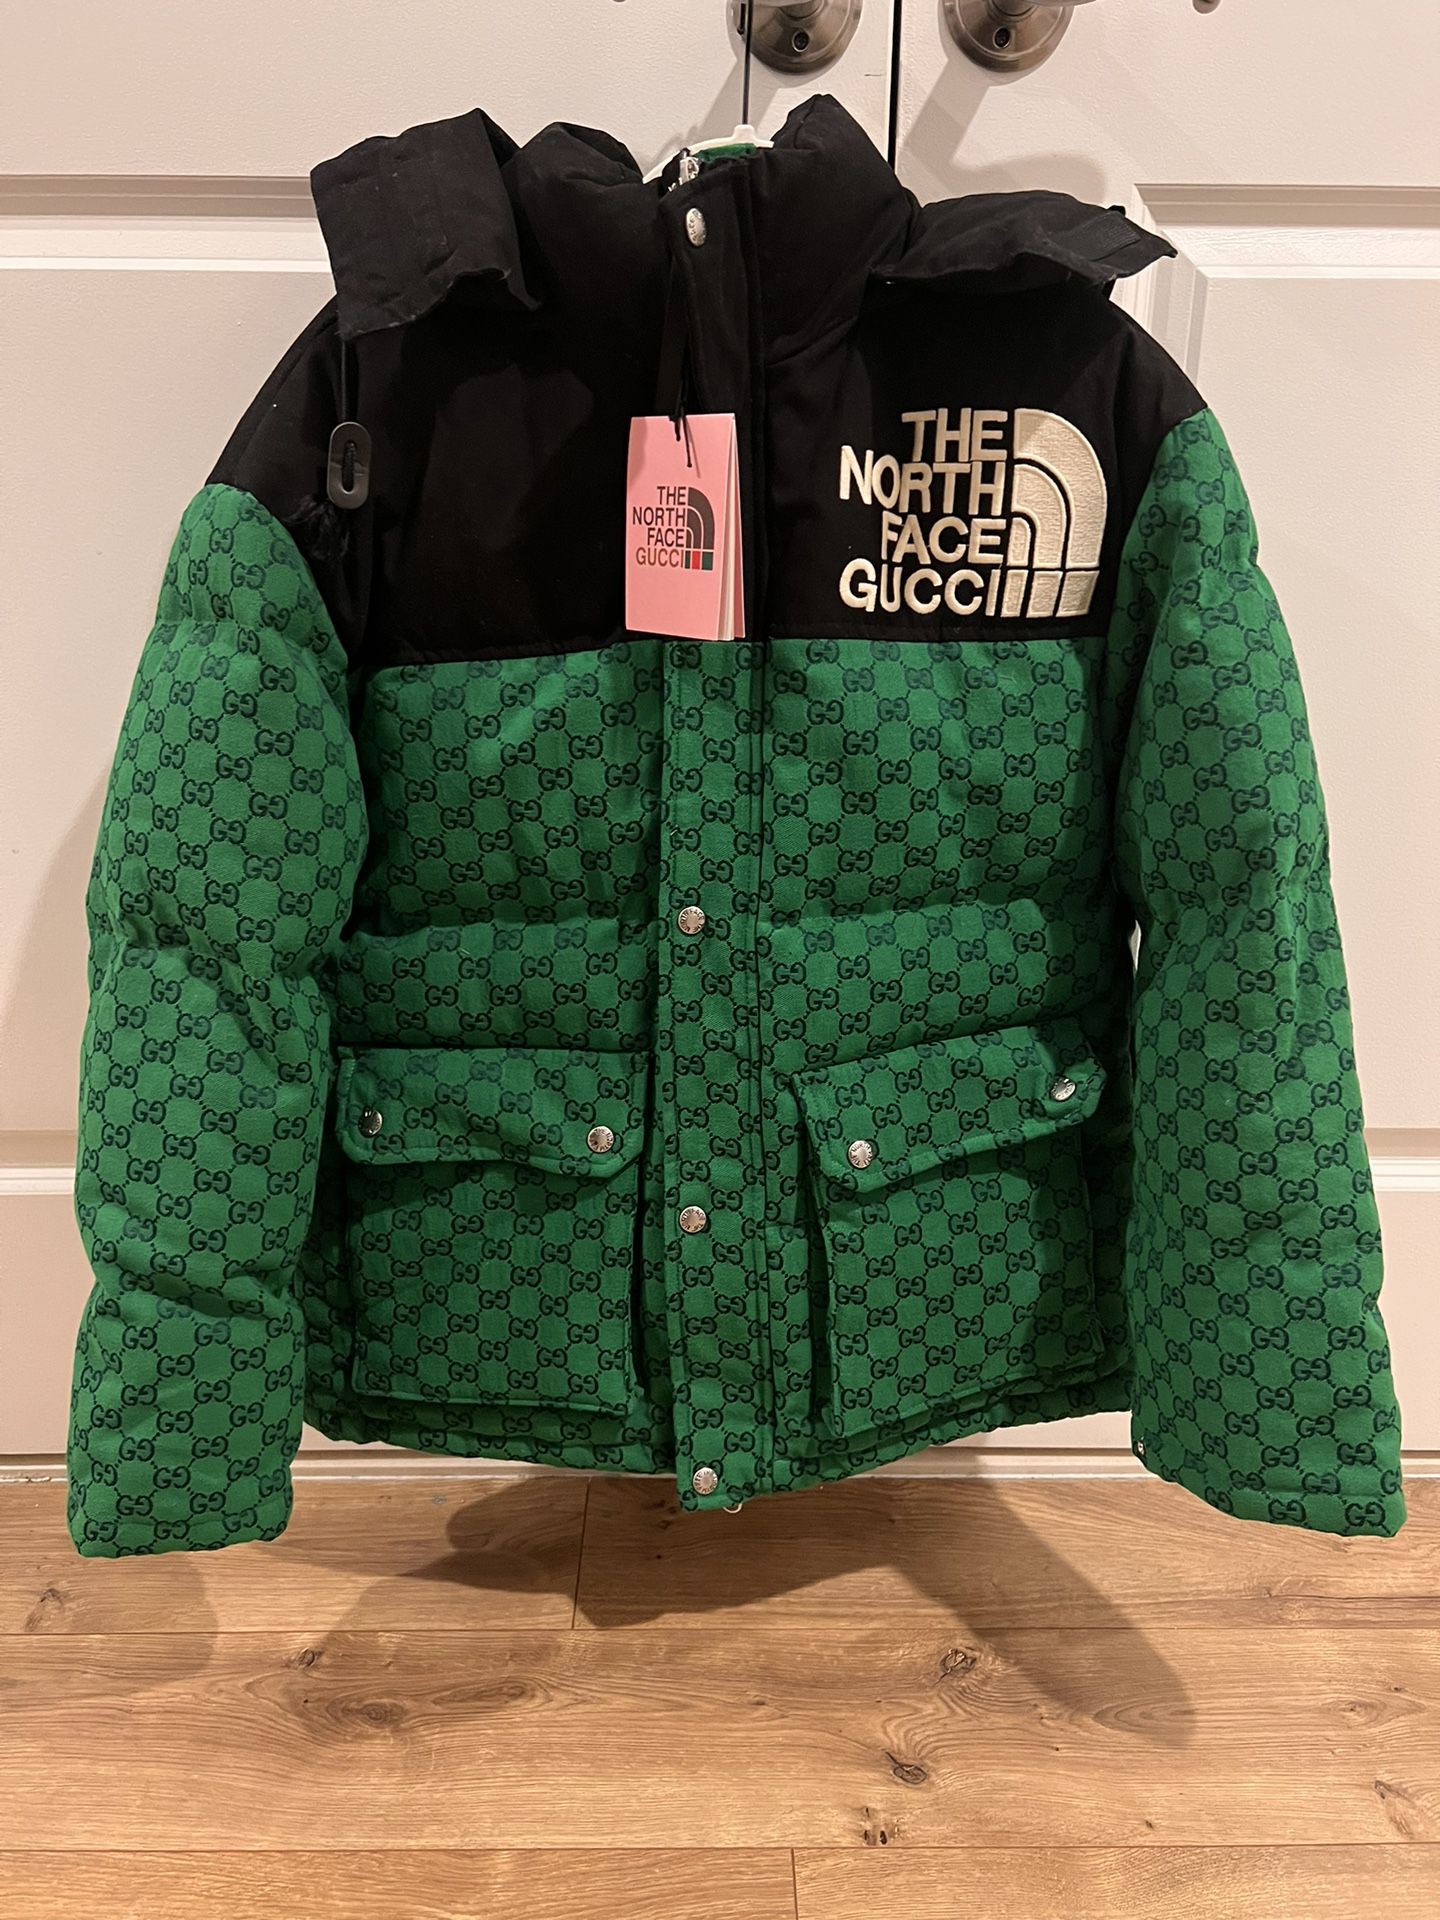 north face gucci jacket green